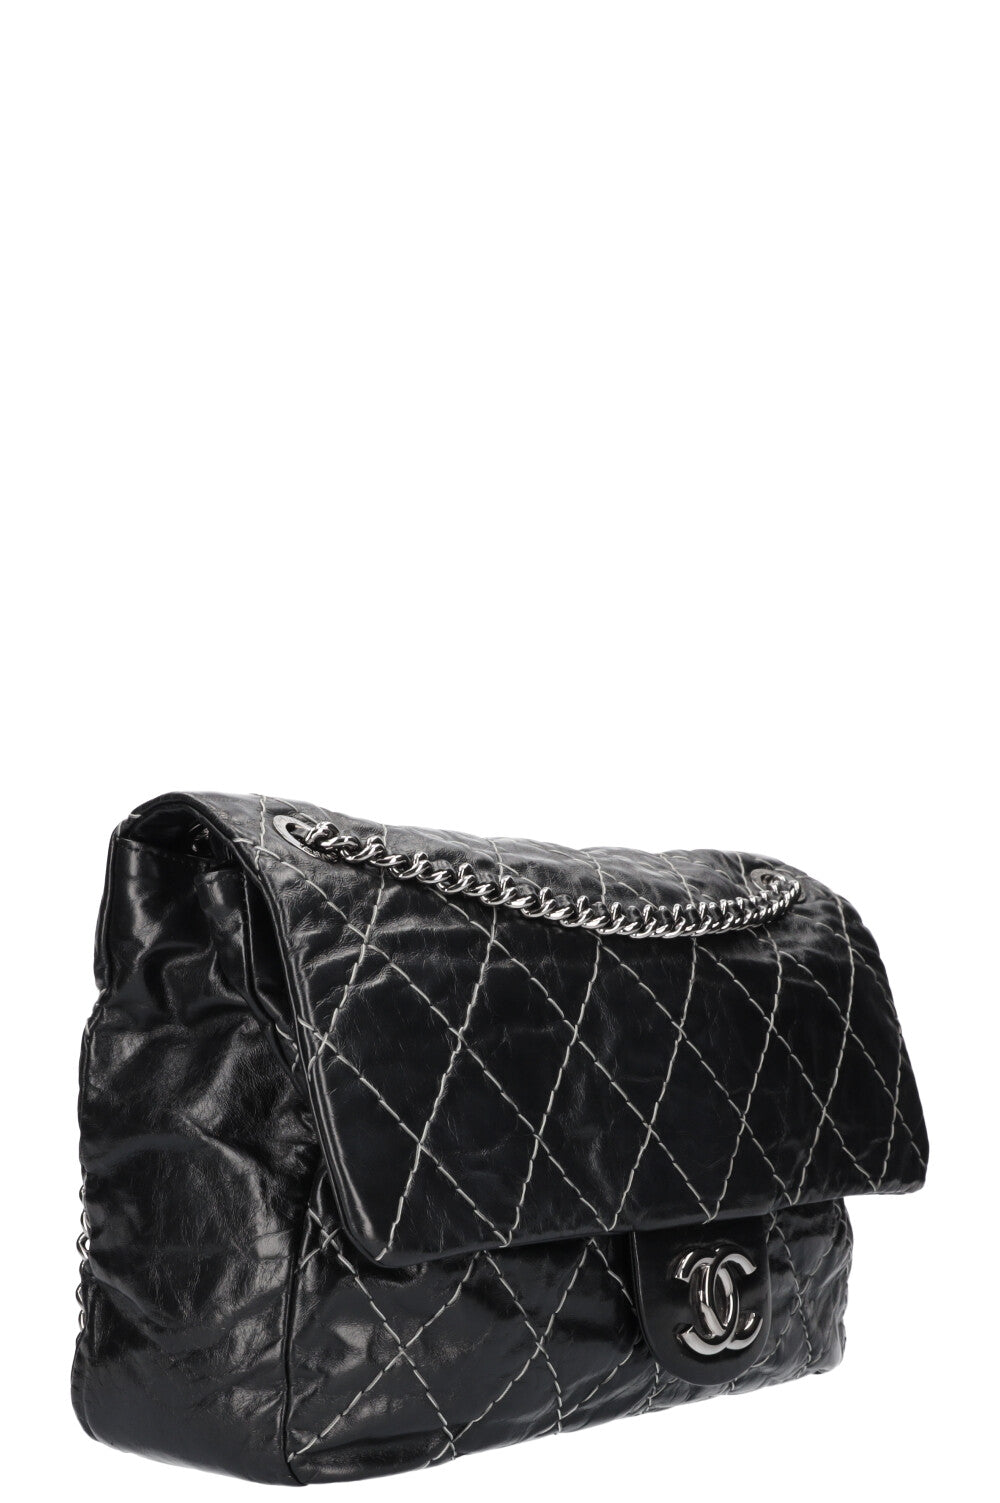 Chanel Double Stitch Flap Bag